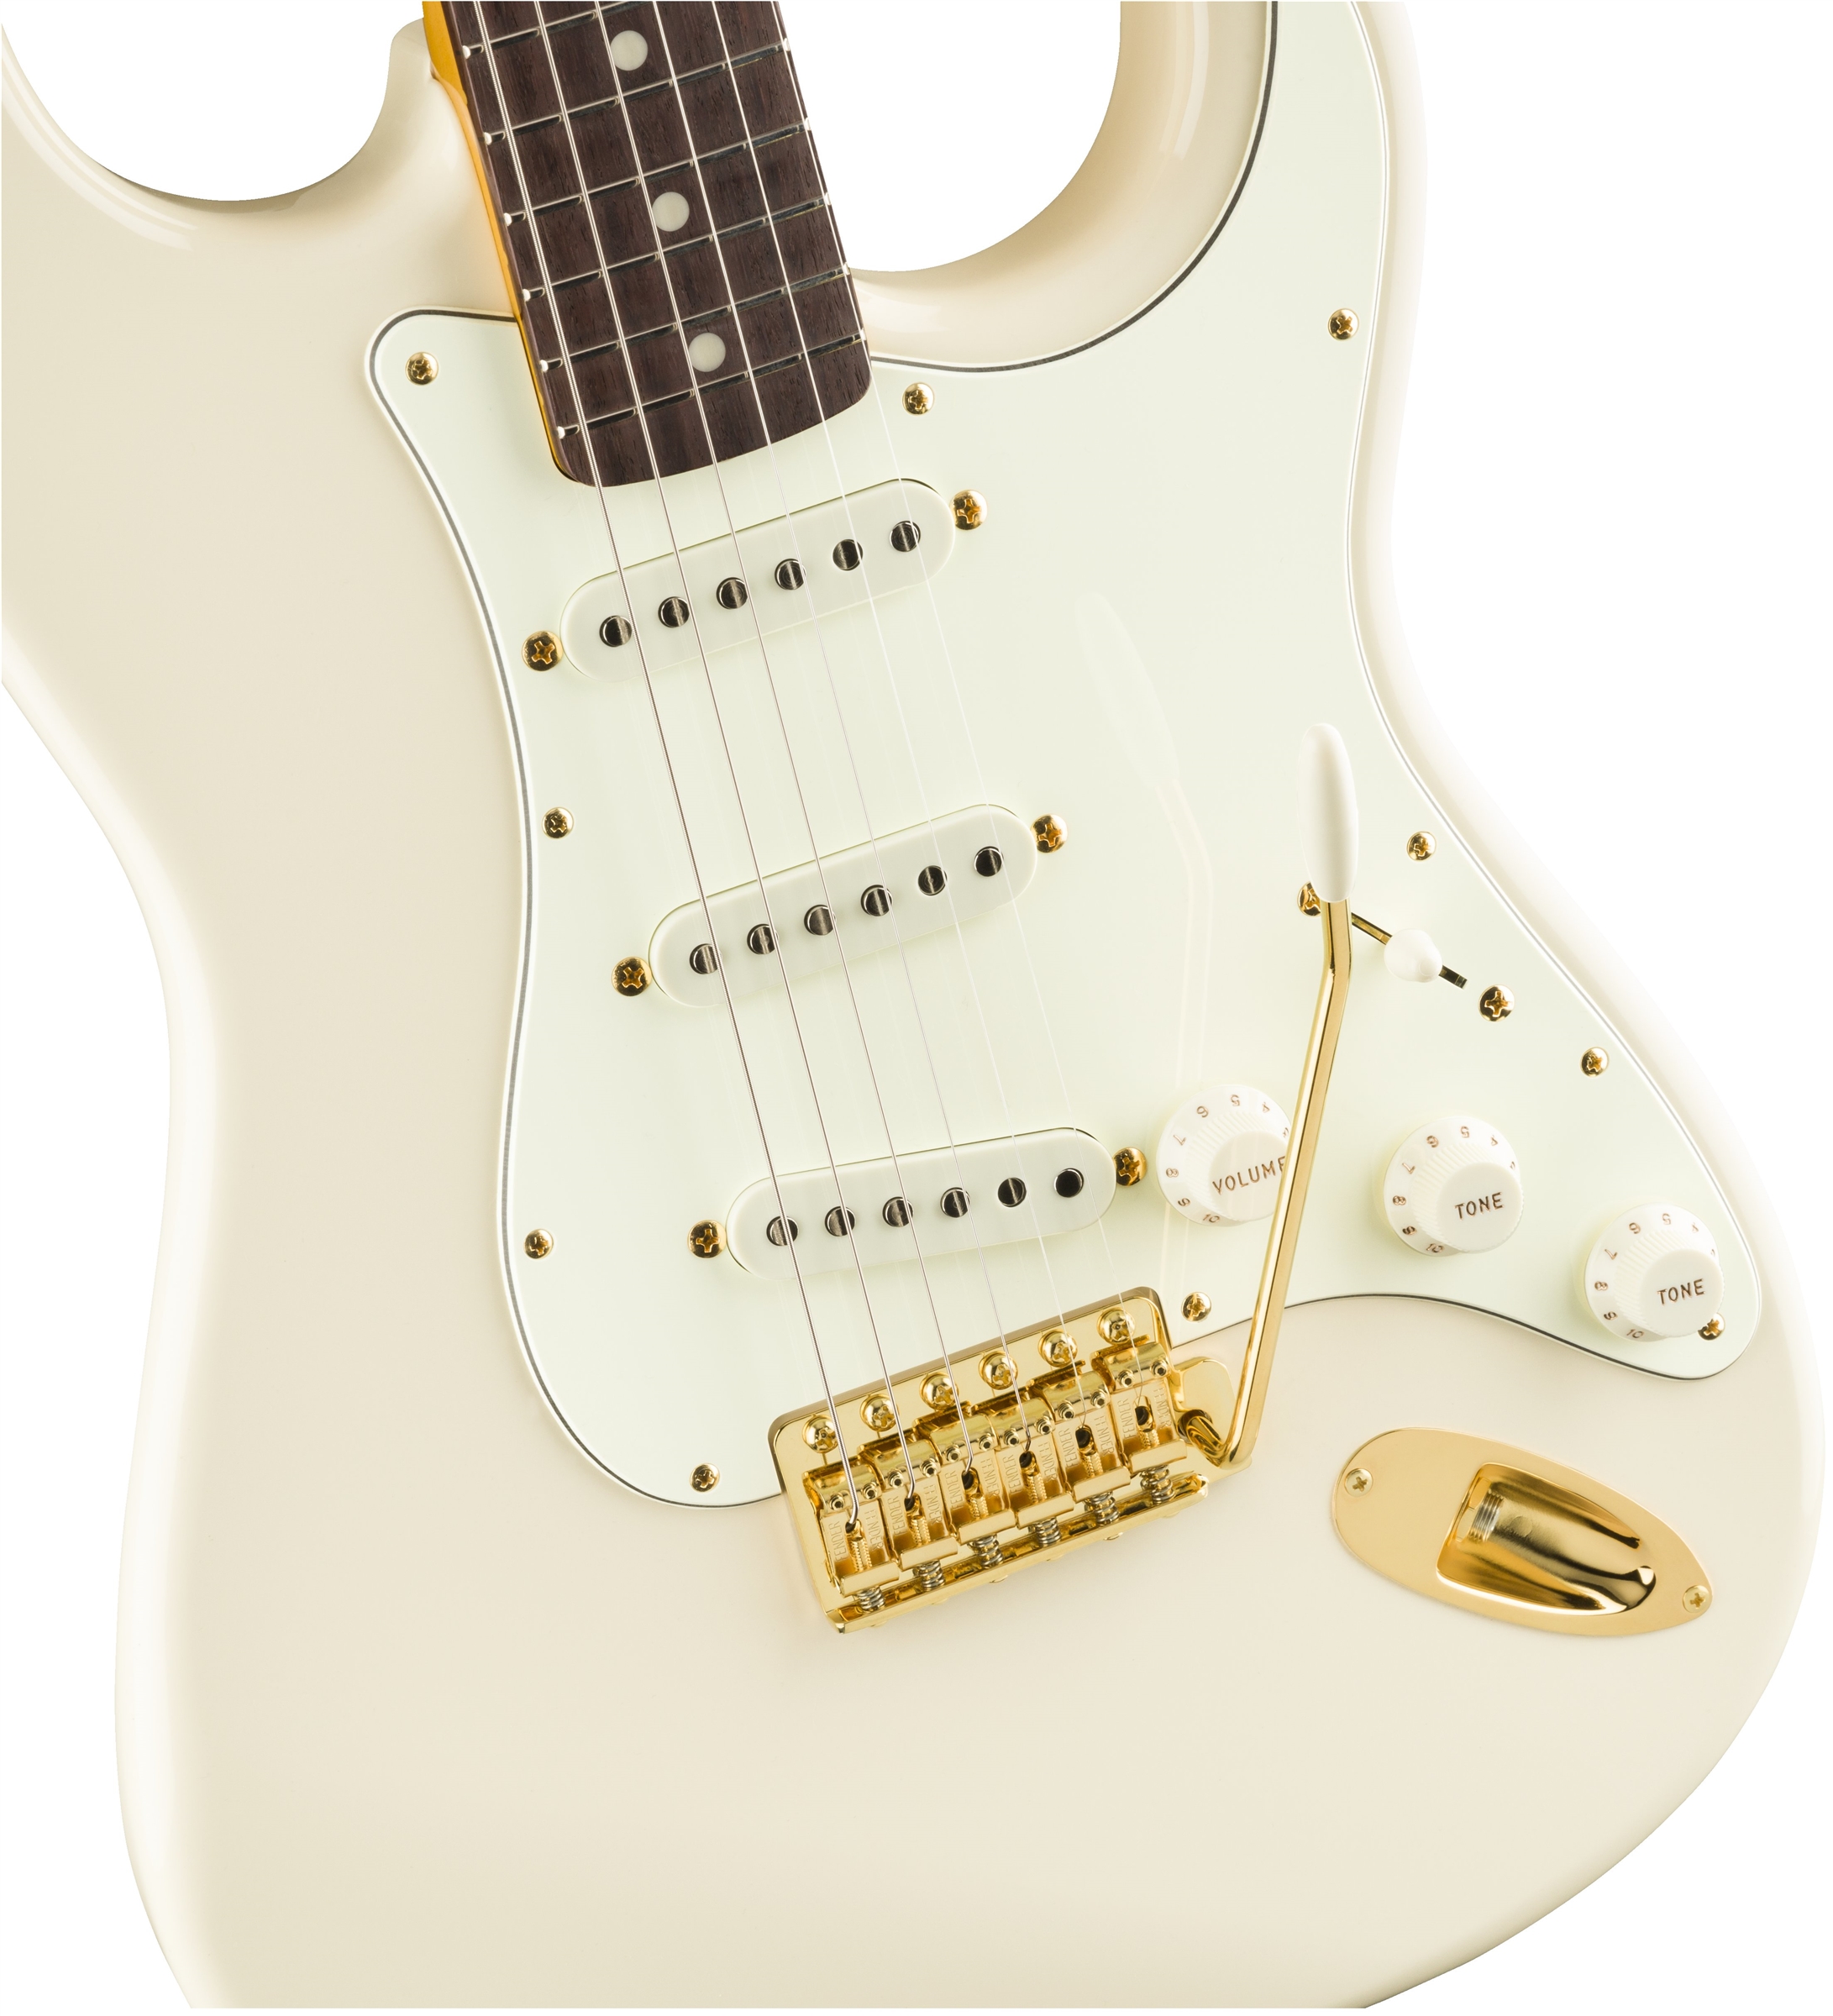 Fender Strat Daybreak Ltd 2019 Japon Gh Rw - Olympic White - Guitarra eléctrica con forma de str. - Variation 4